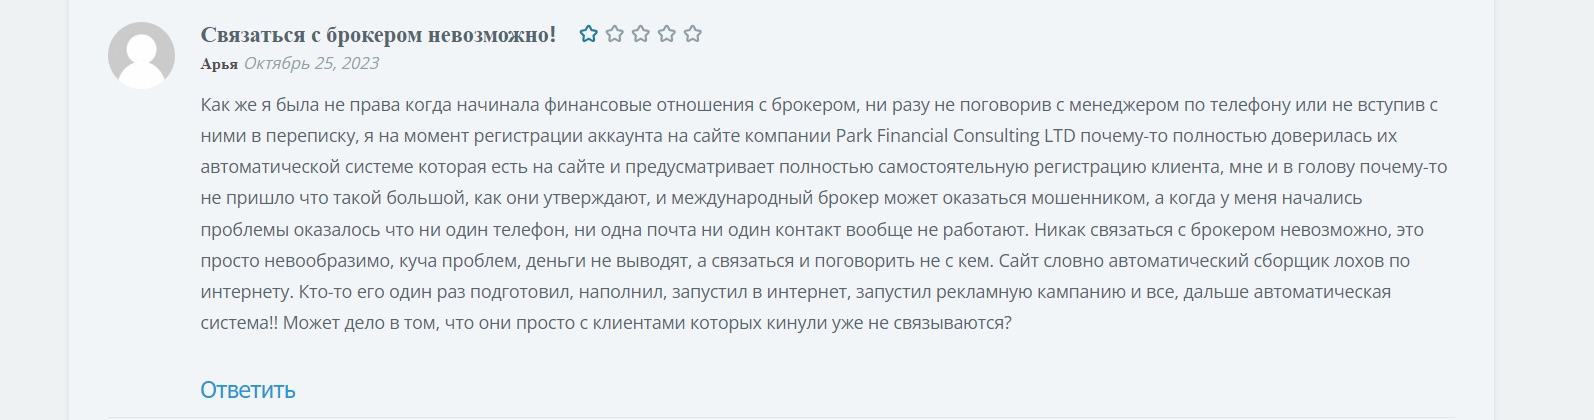 Park financial consulting ltd - отзывы